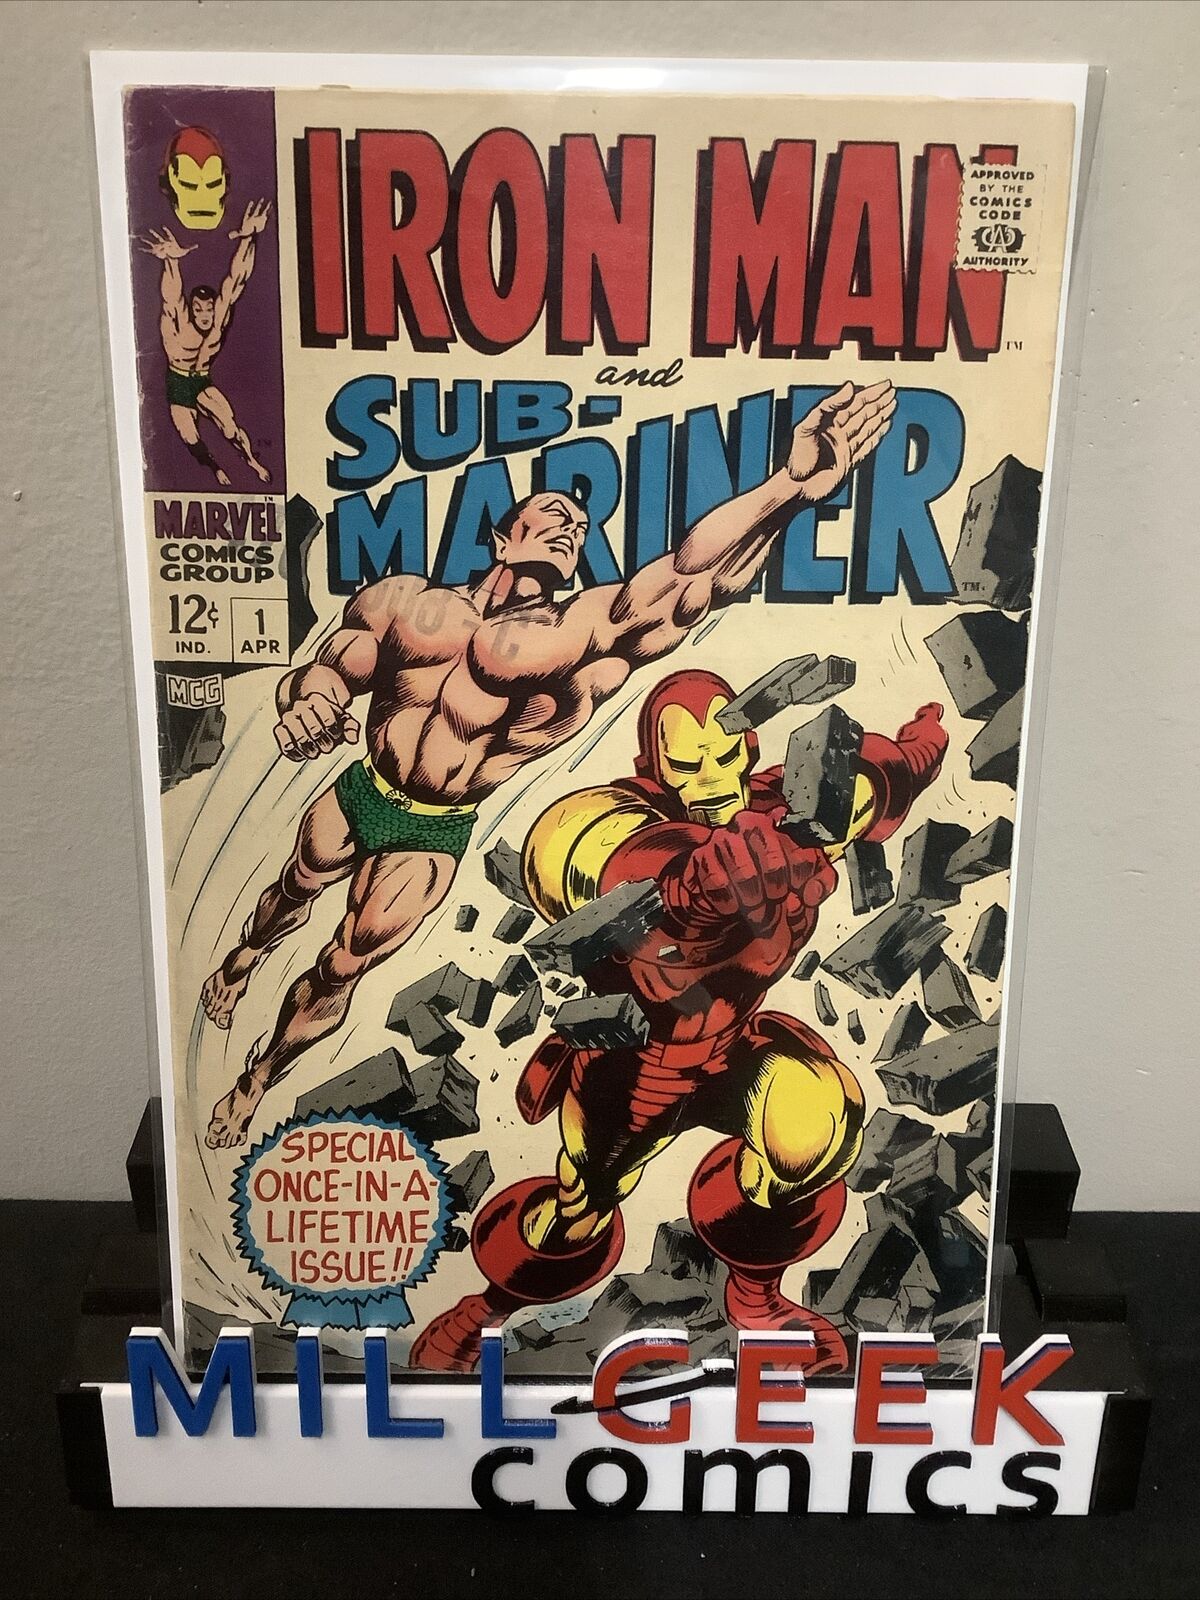 Iron Man And Sub-Mariner #1 (April 1968) VG- (3.5) Roy Thomas/Bill Everett